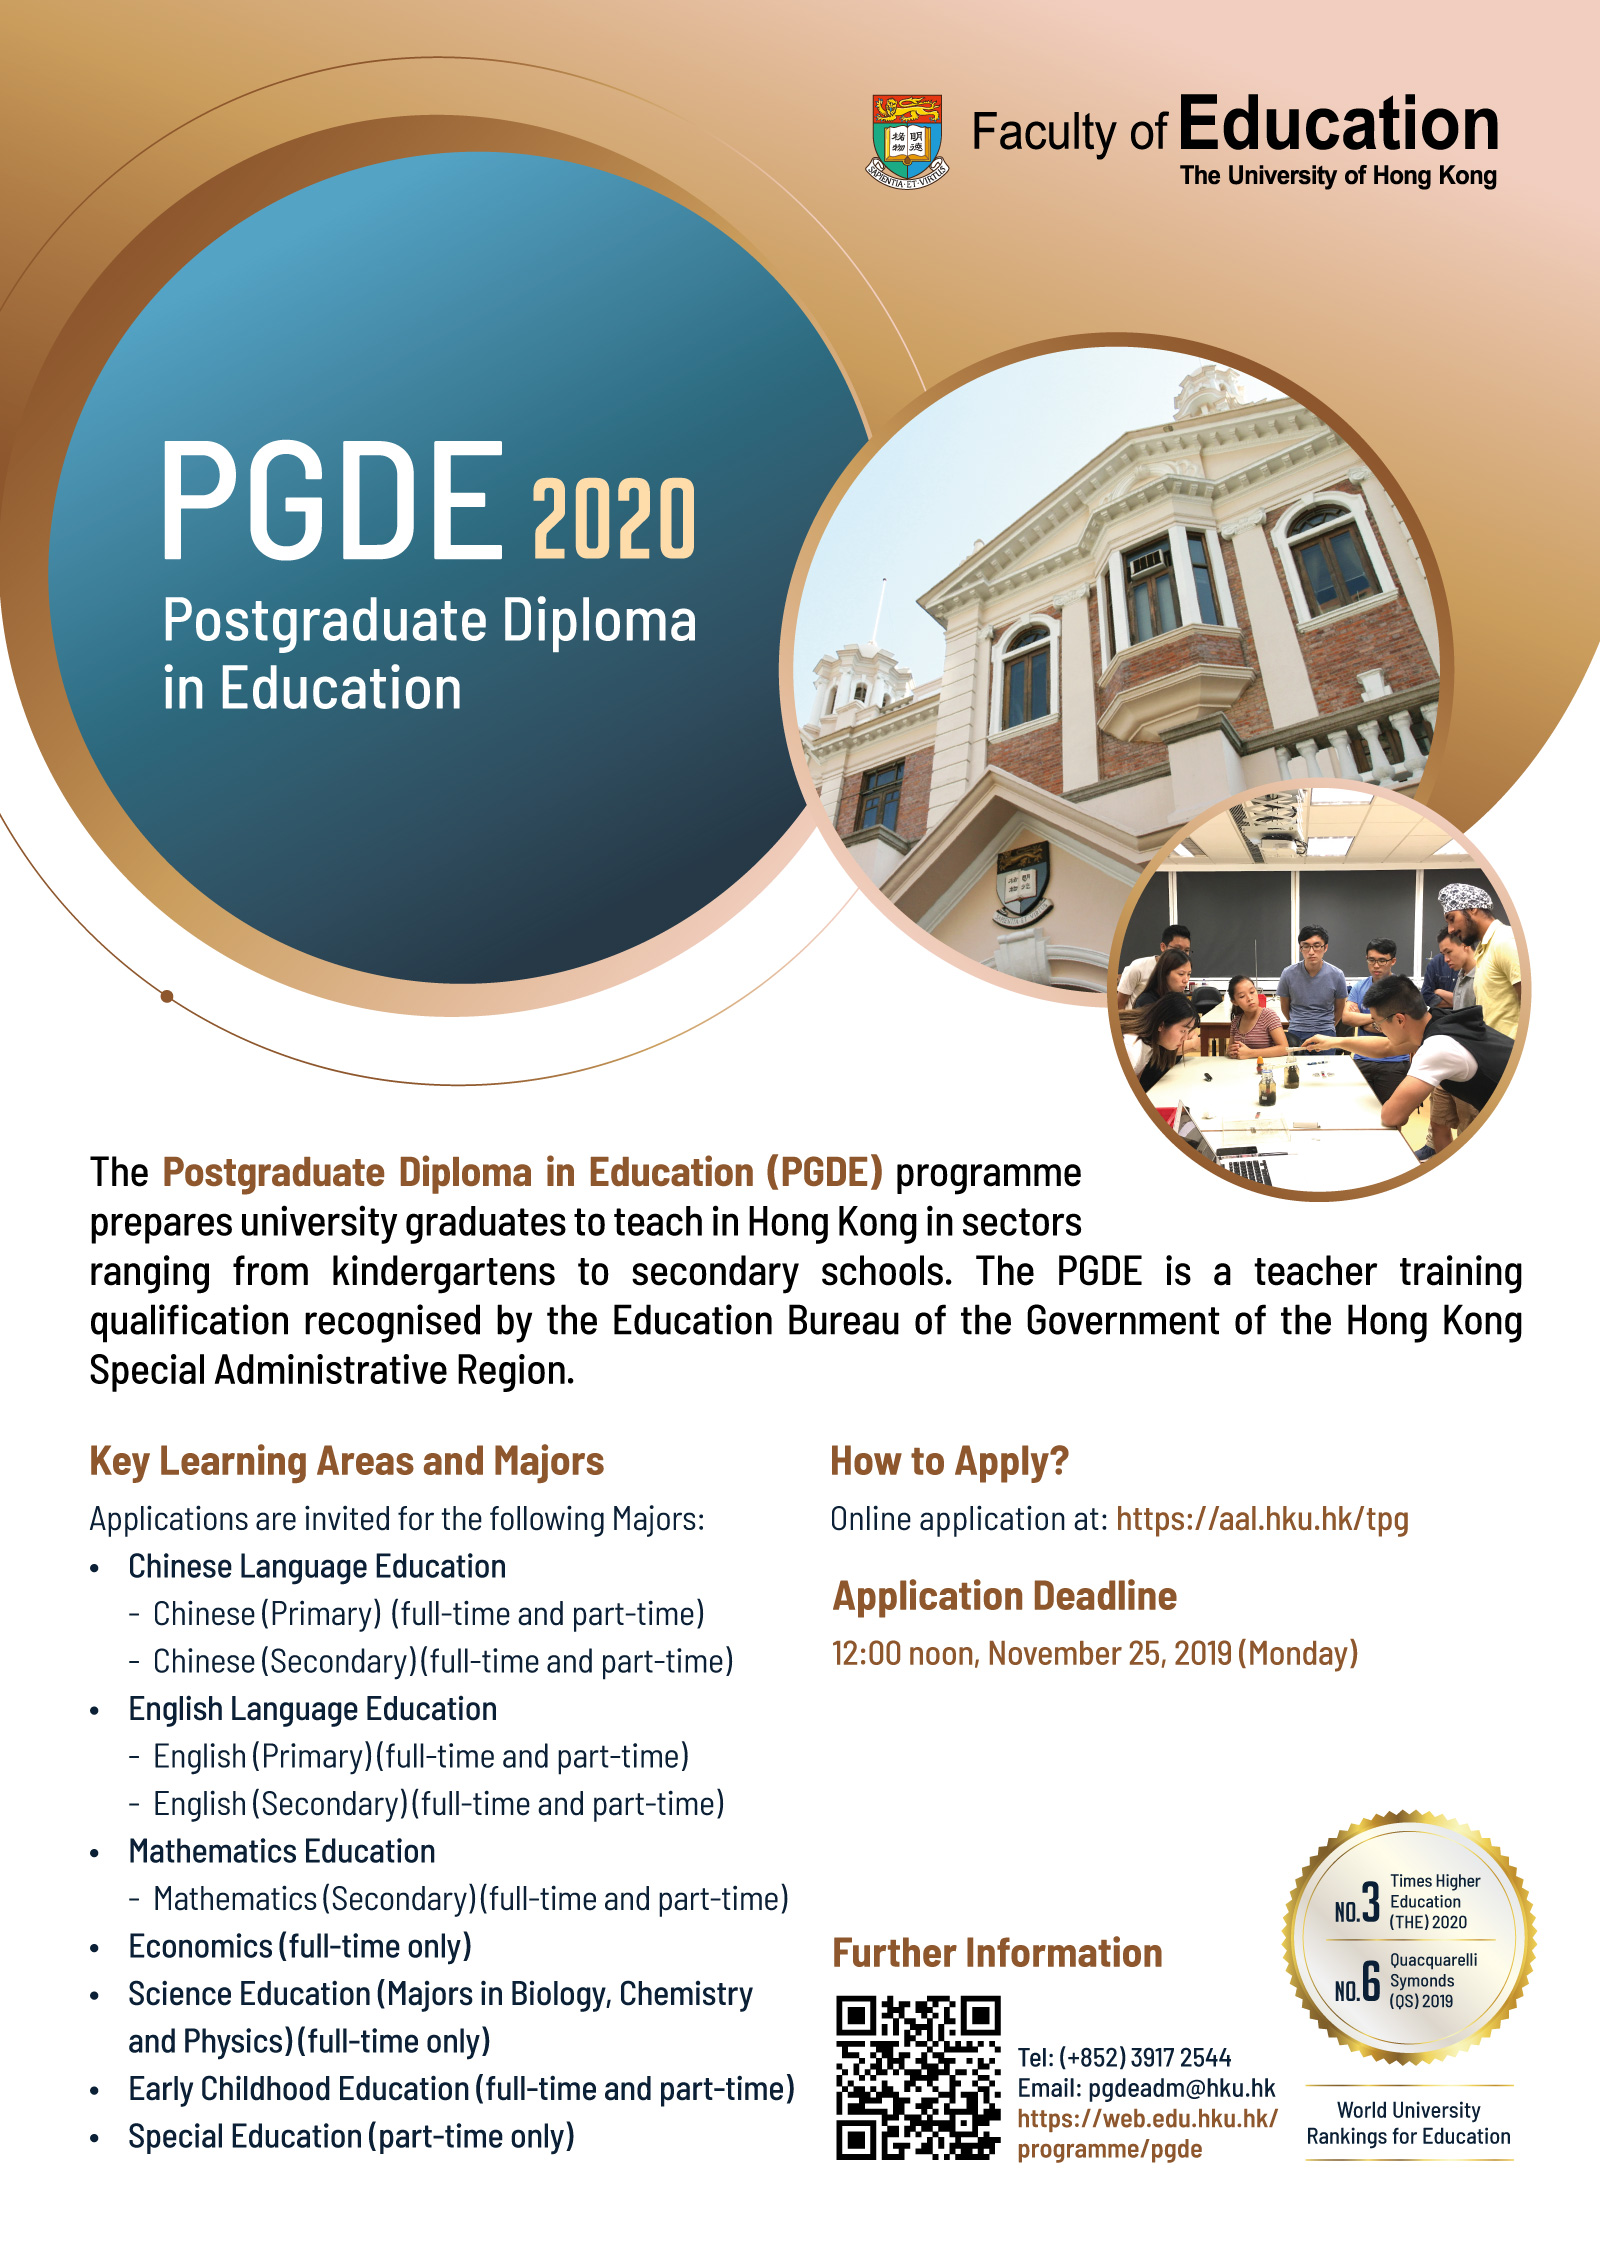 Application of PGDE